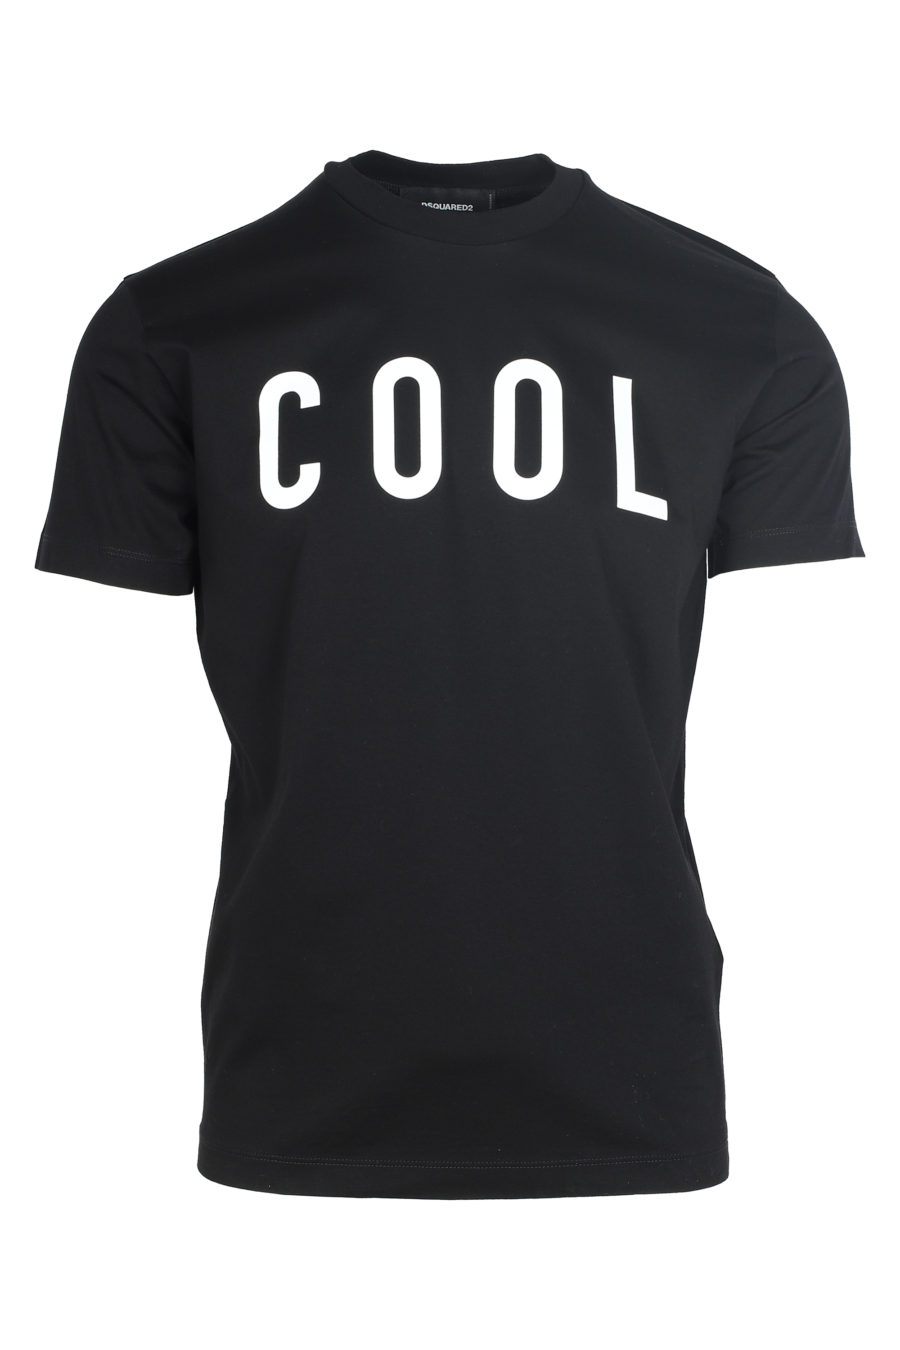 T-shirt noir "Cool" en blanc - IMG 5909